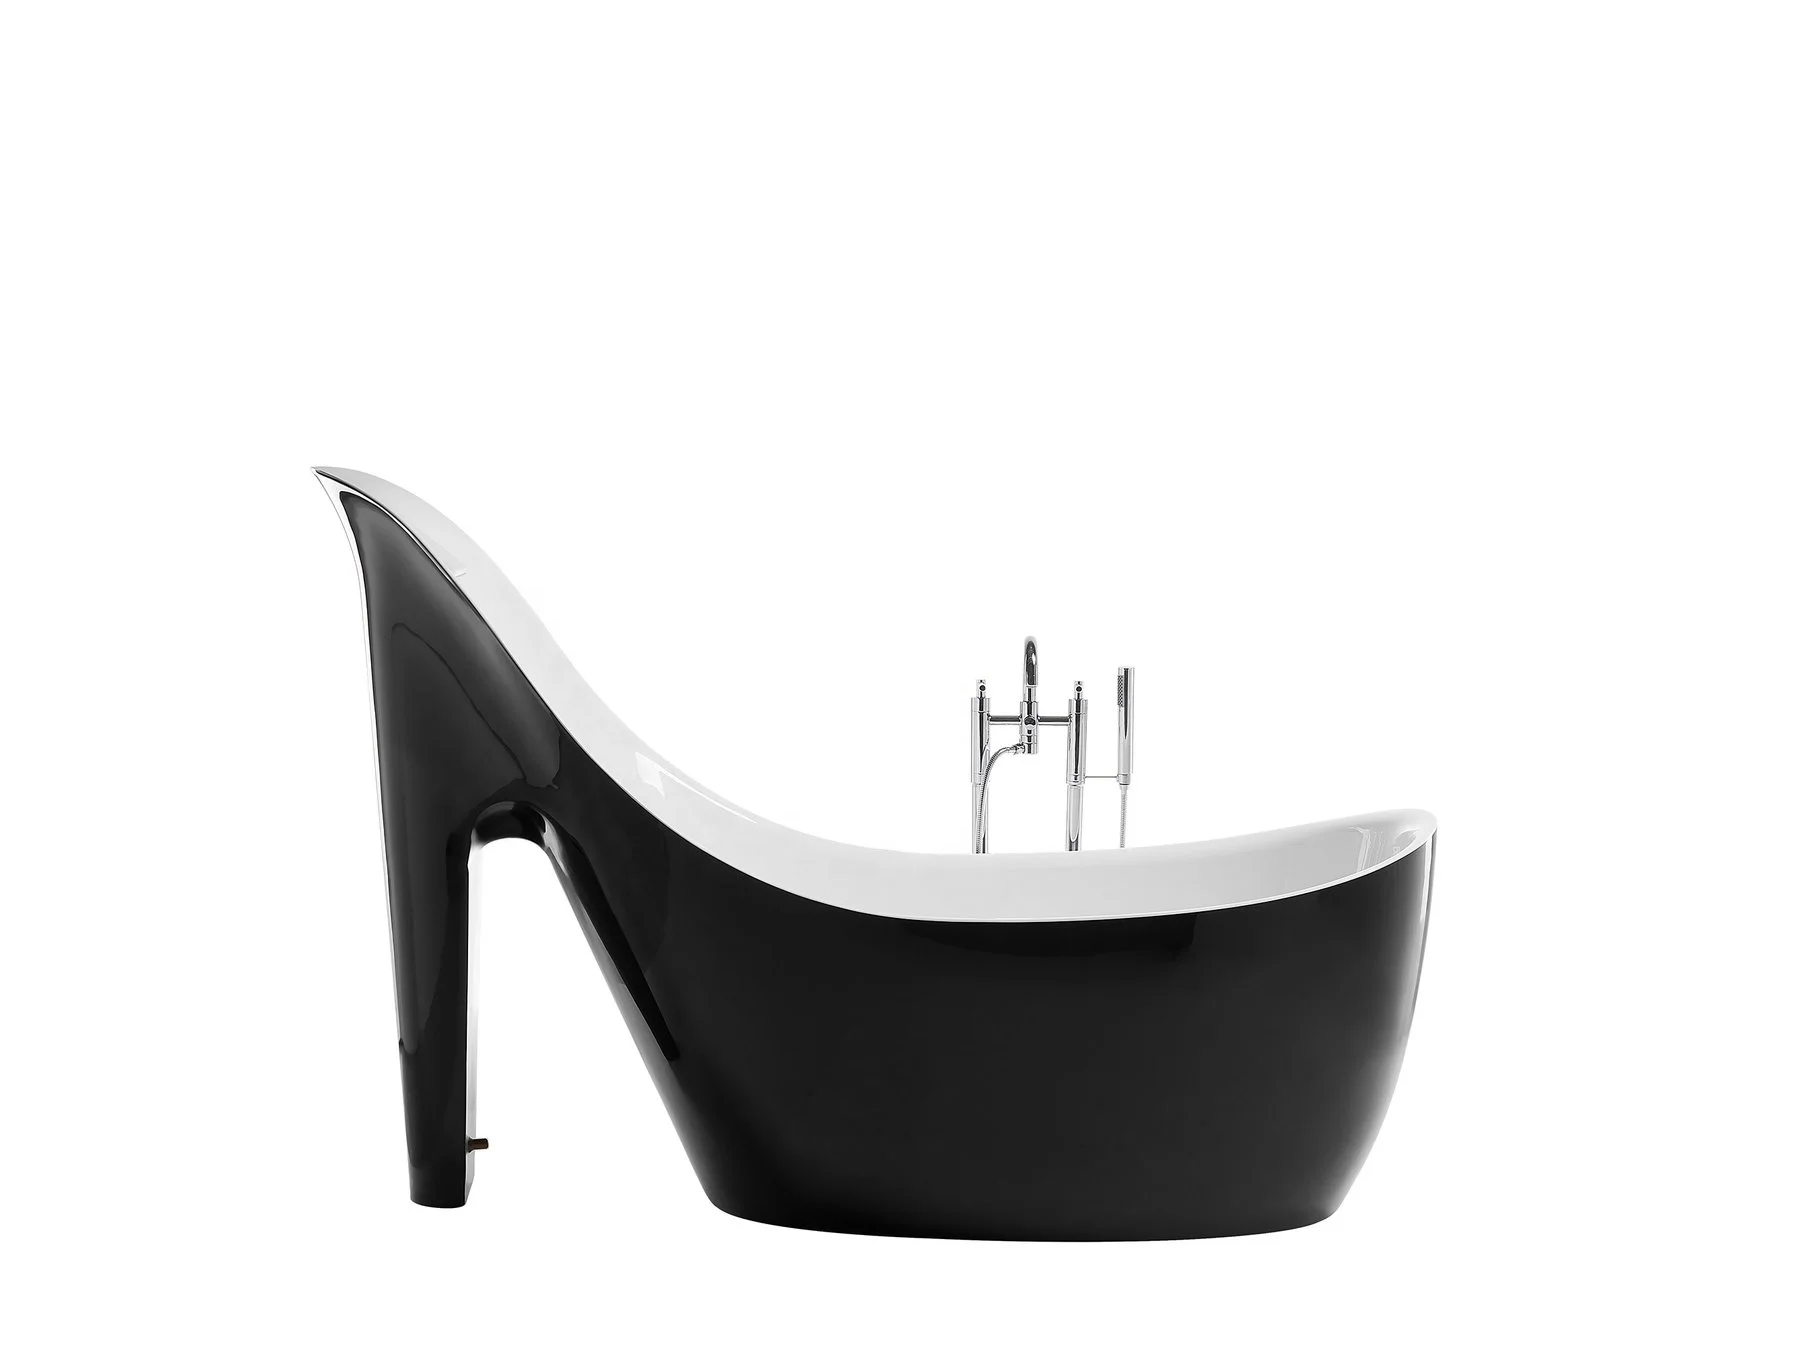 
Hot sale modern design cheap acrylic freestanding soaking bath tub red high heeled shoes free standing bathtub for bathroom 